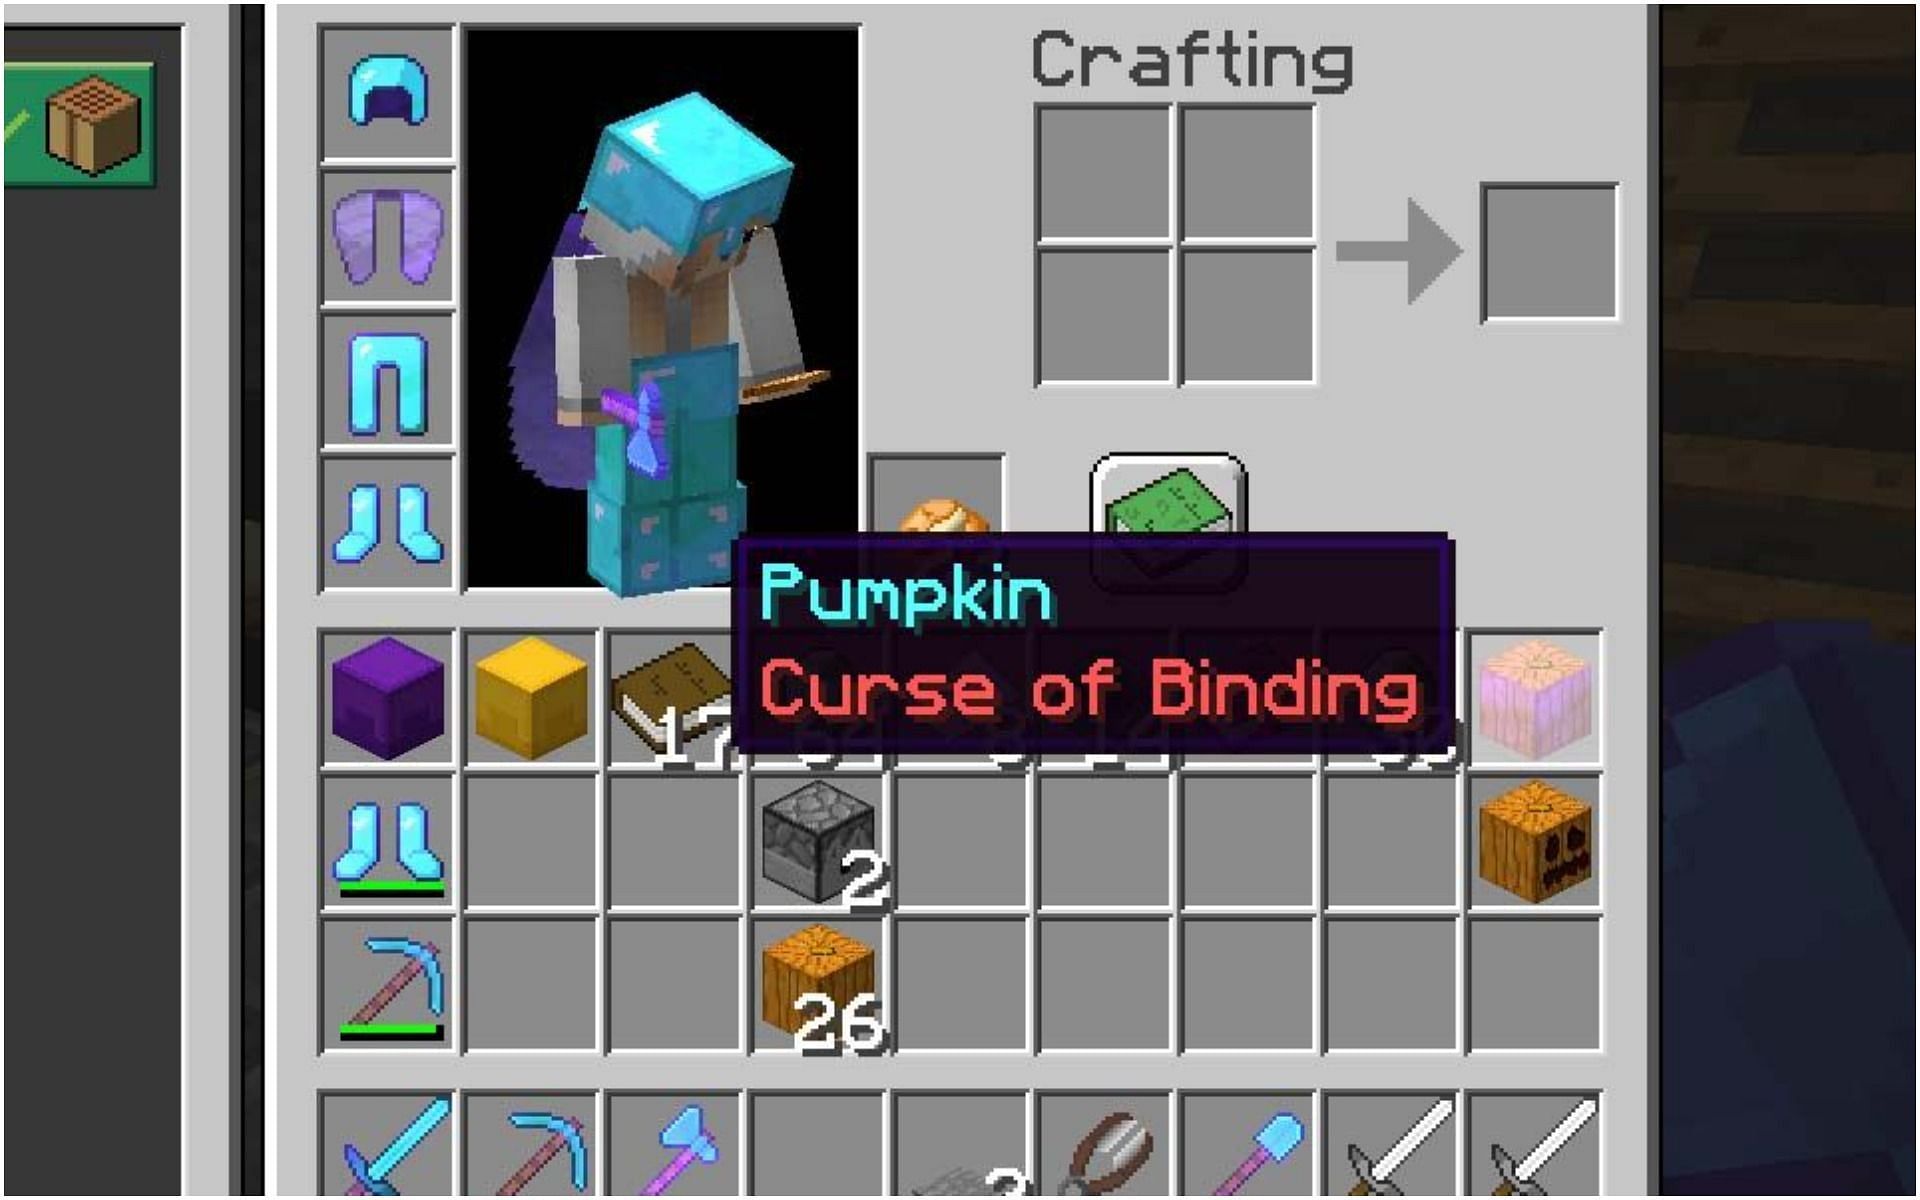 Curse of Binding in Minecraft (Image via Minecraft)